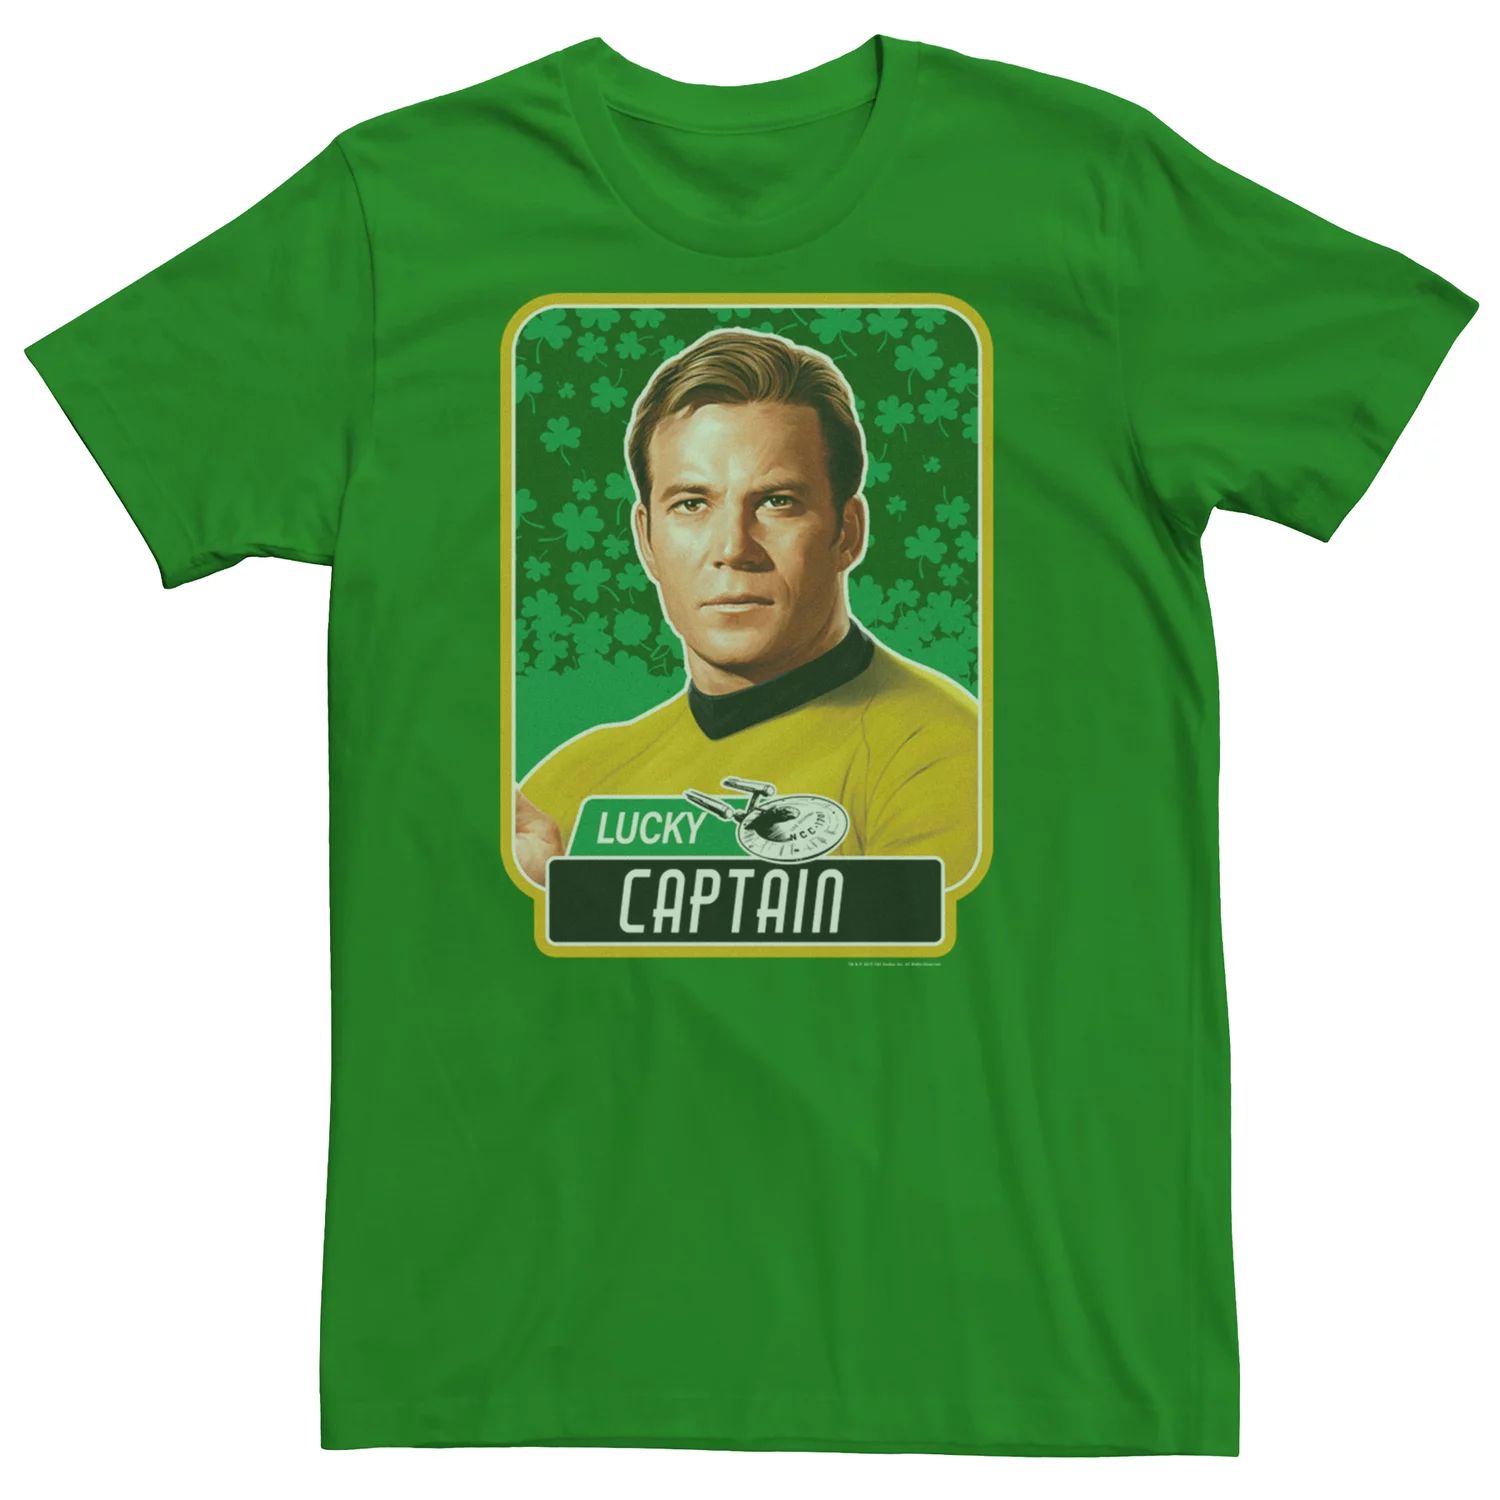 Мужская футболка Star Trek Captain Kirk St. Патрикс Licensed Character tubbz фигурка утка tubbz star trek james t kirk